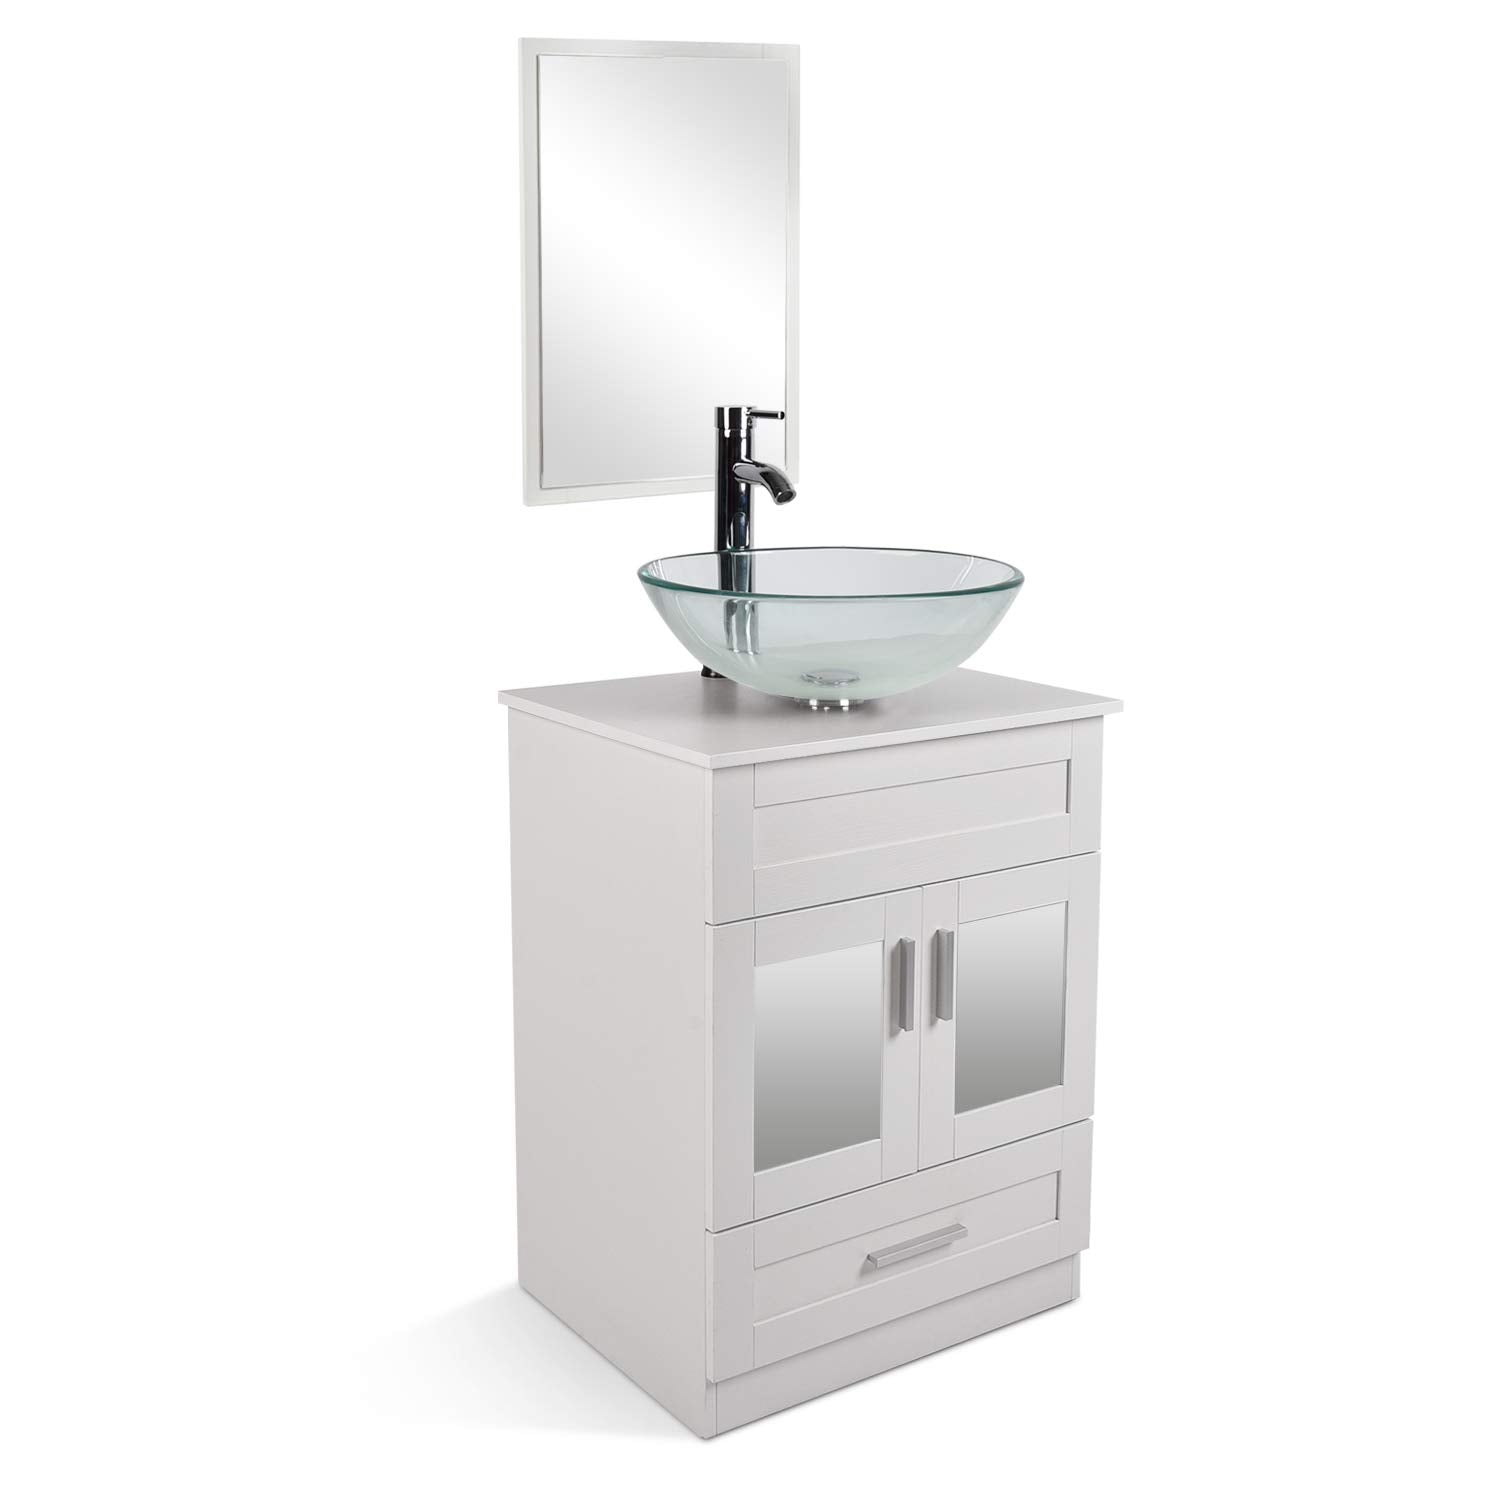 Elecwish White Bathroom Vanity with Glossy Glass Sink Set BA1001-WH